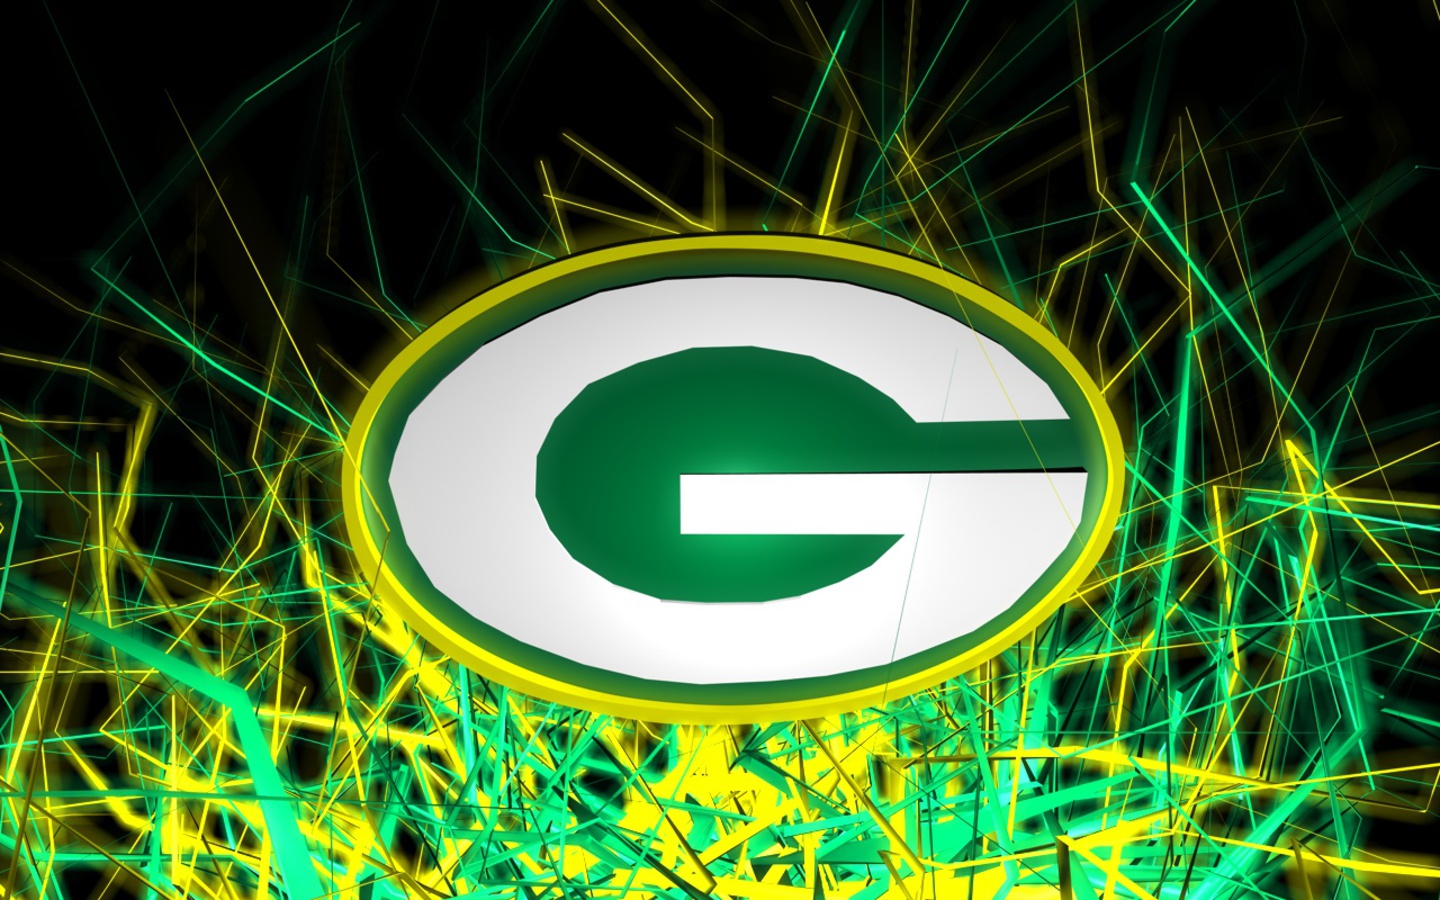 [46+] Green Bay Packers Images Wallpaper Logo on WallpaperSafari